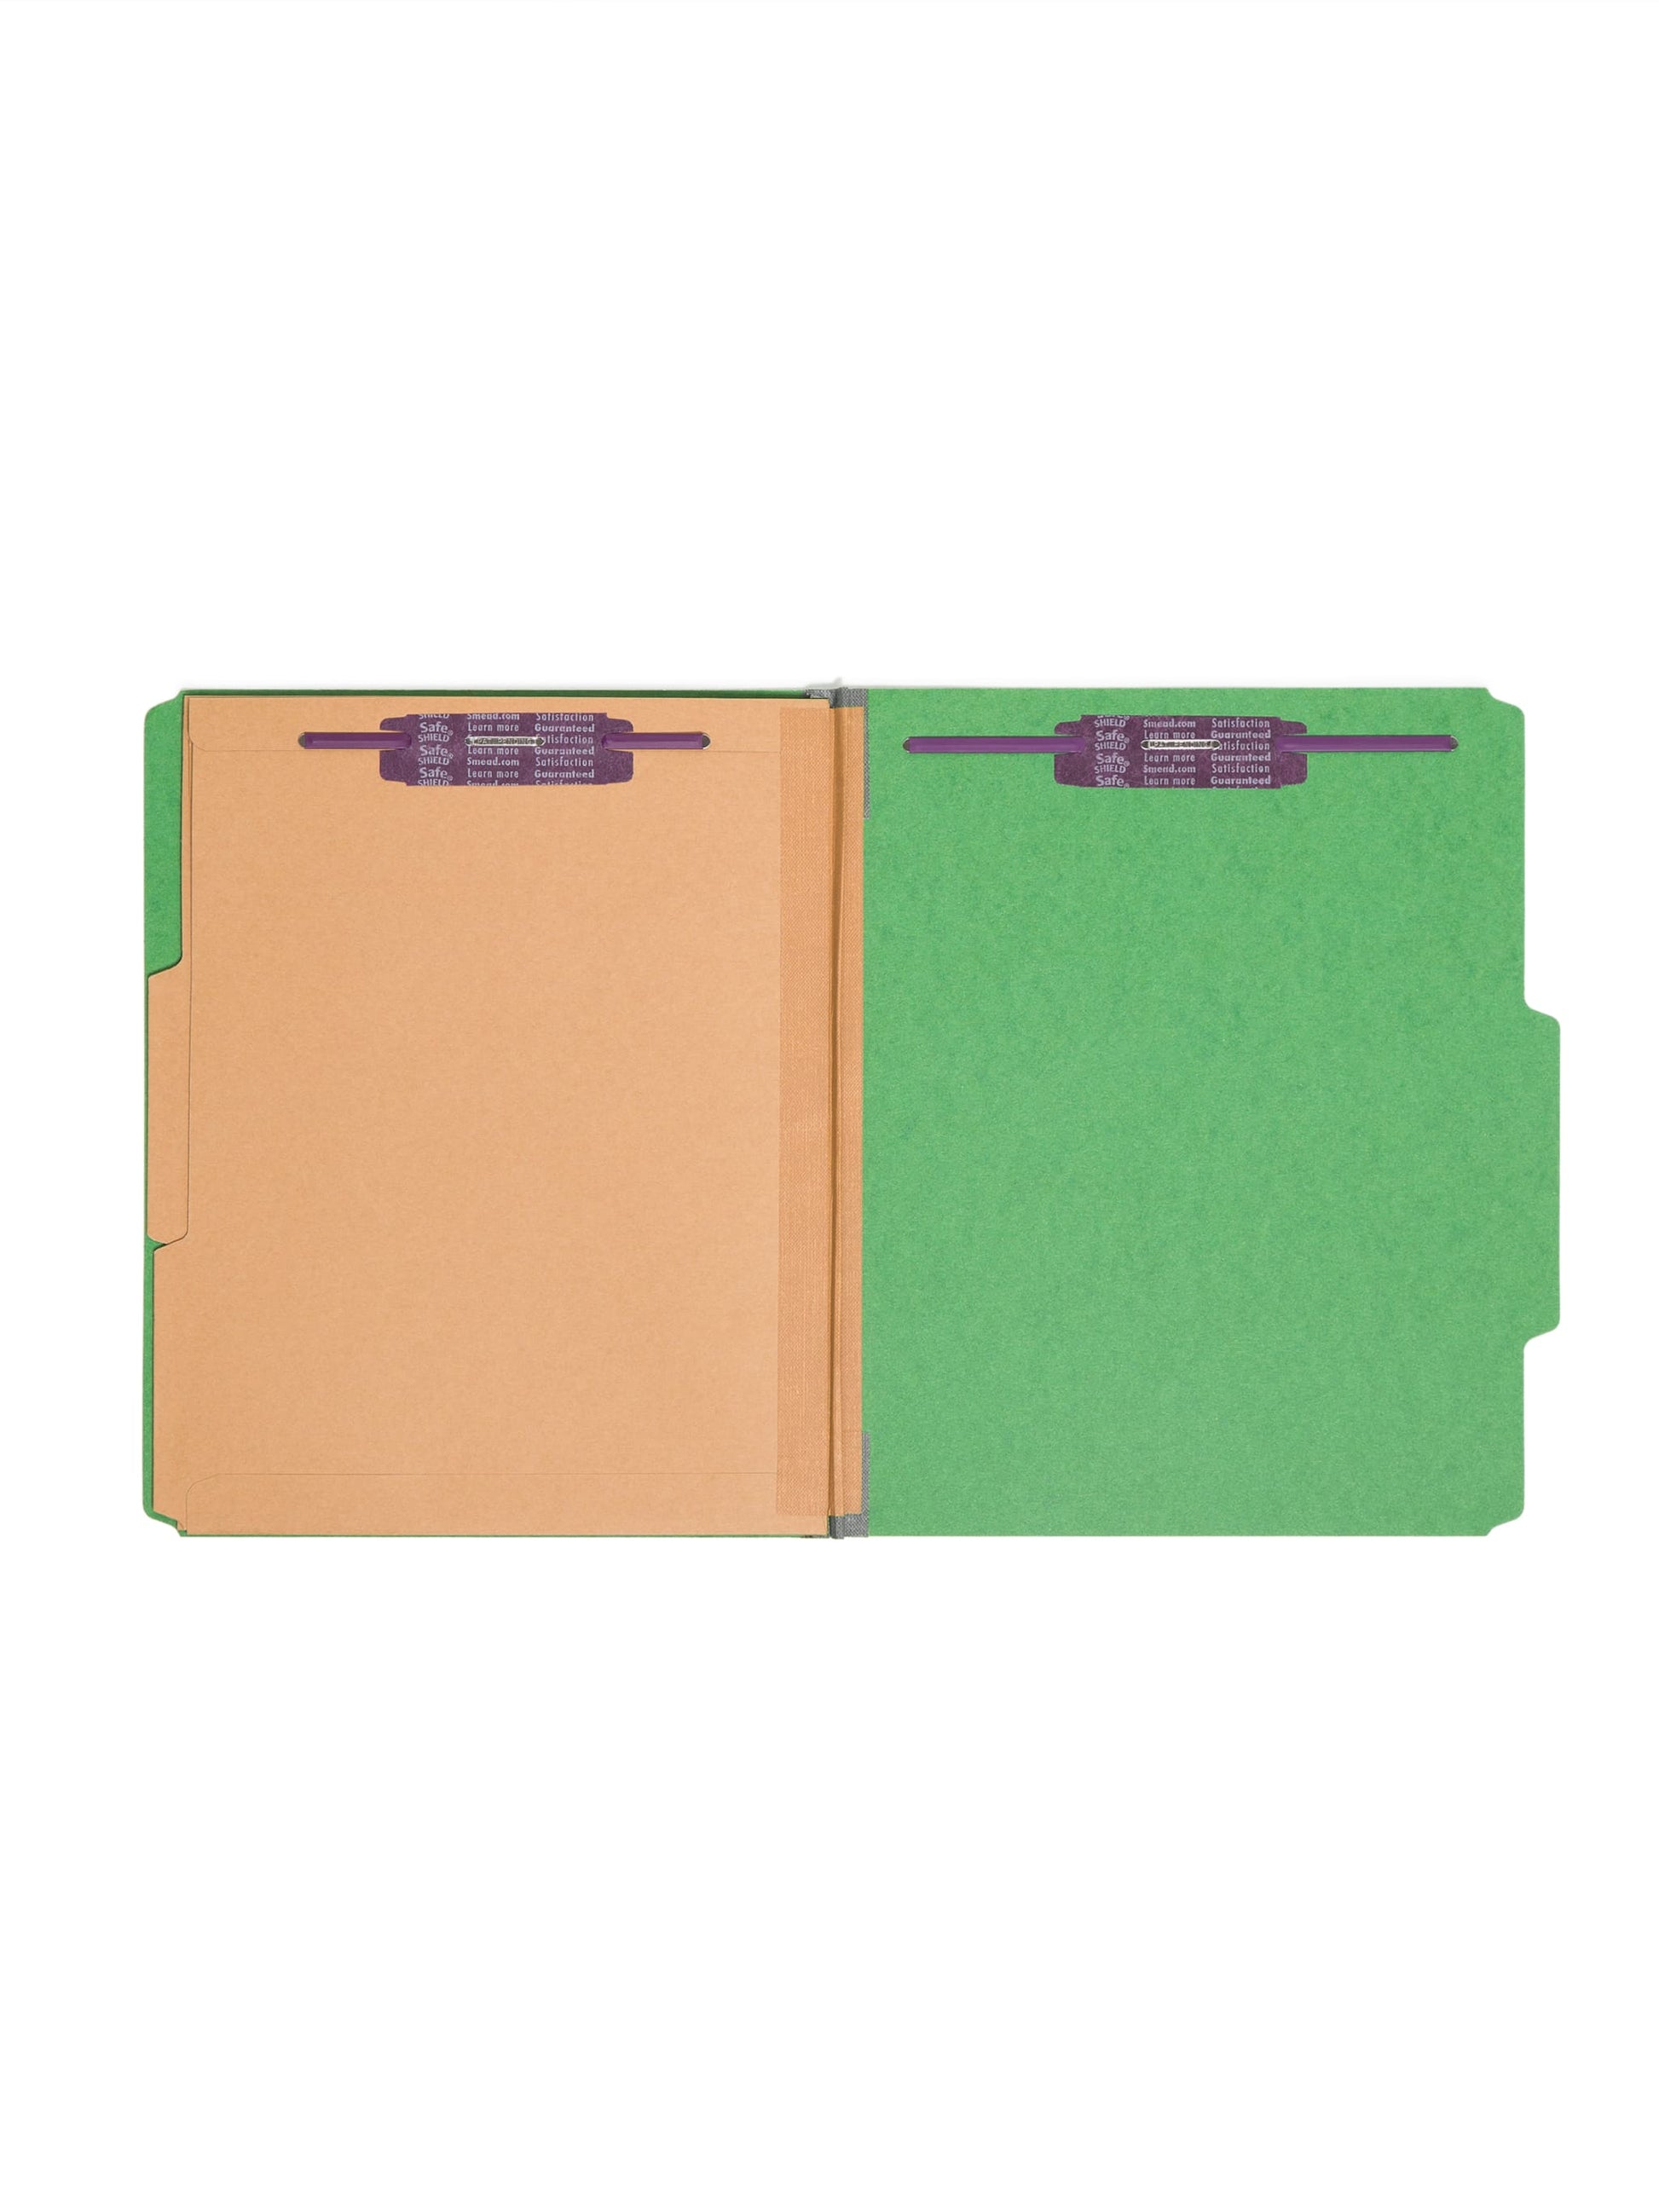 SafeSHIELD® Pressboard Classification File Folders with Pocket Dividers, Green Color, Letter Size, Set of 0, 30086486140837